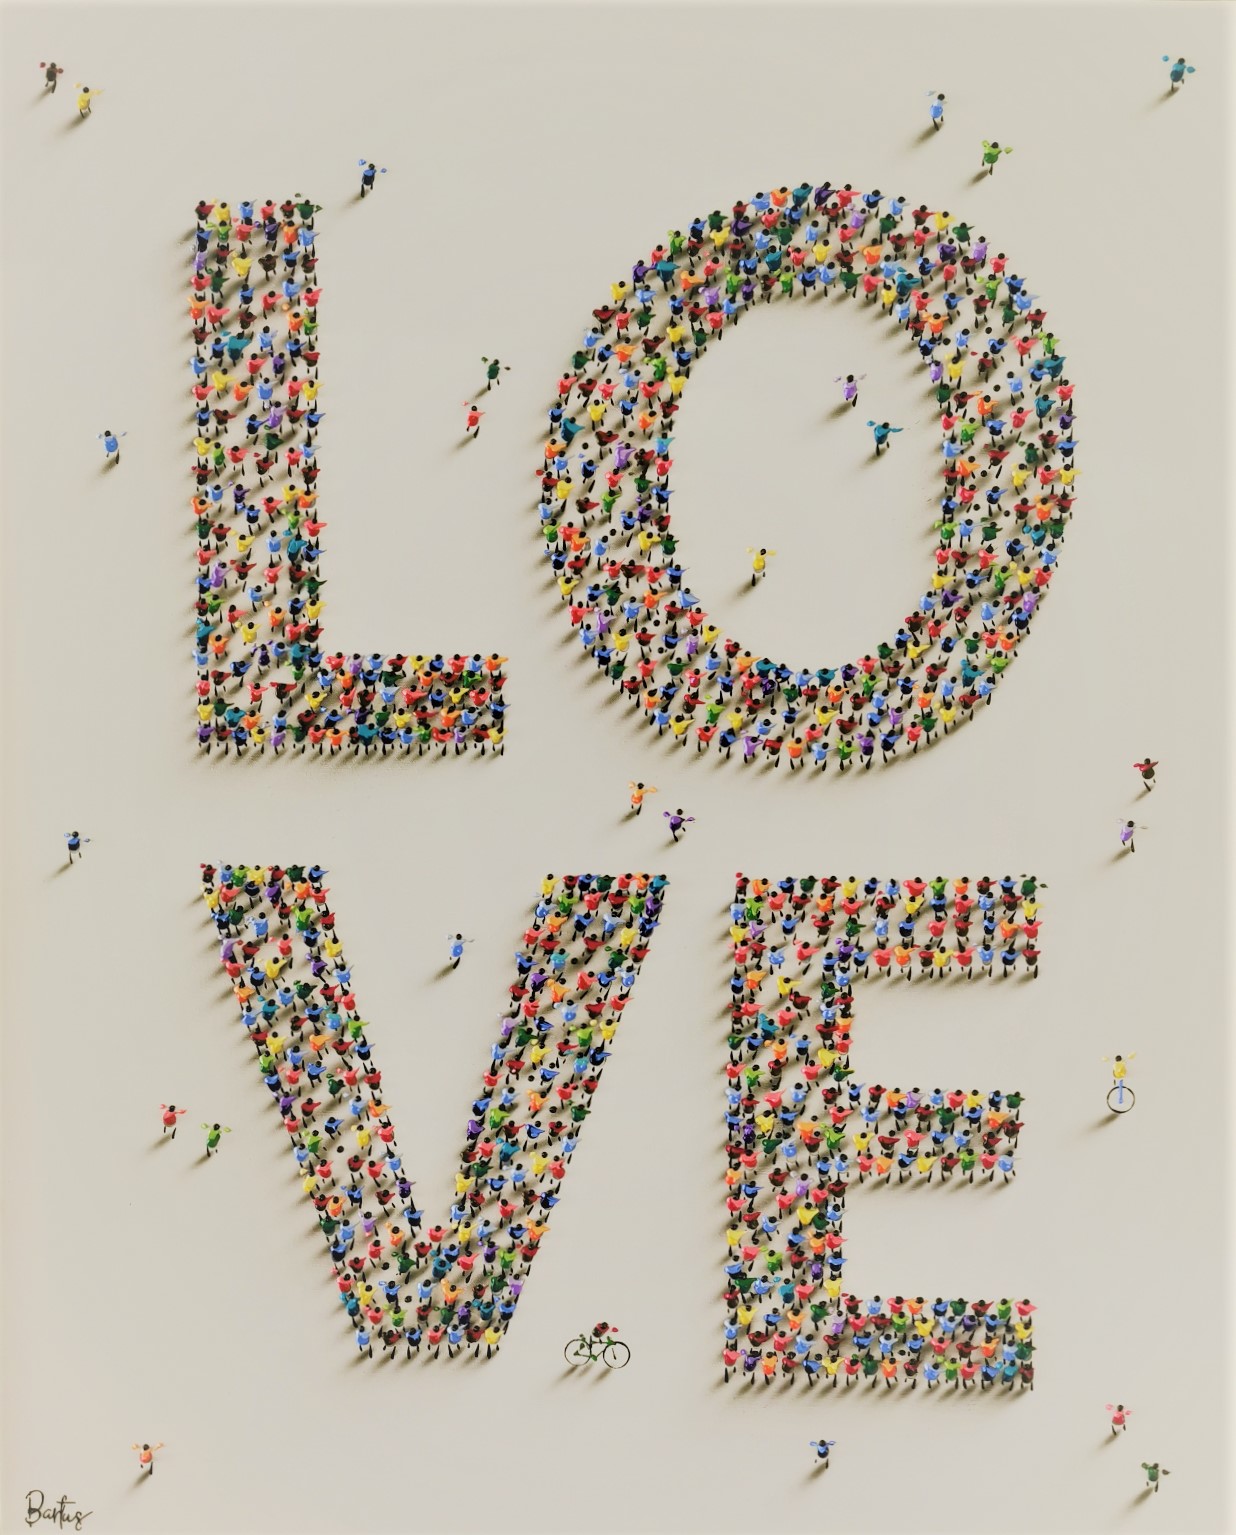 LOVE XI by Francisco Bartus